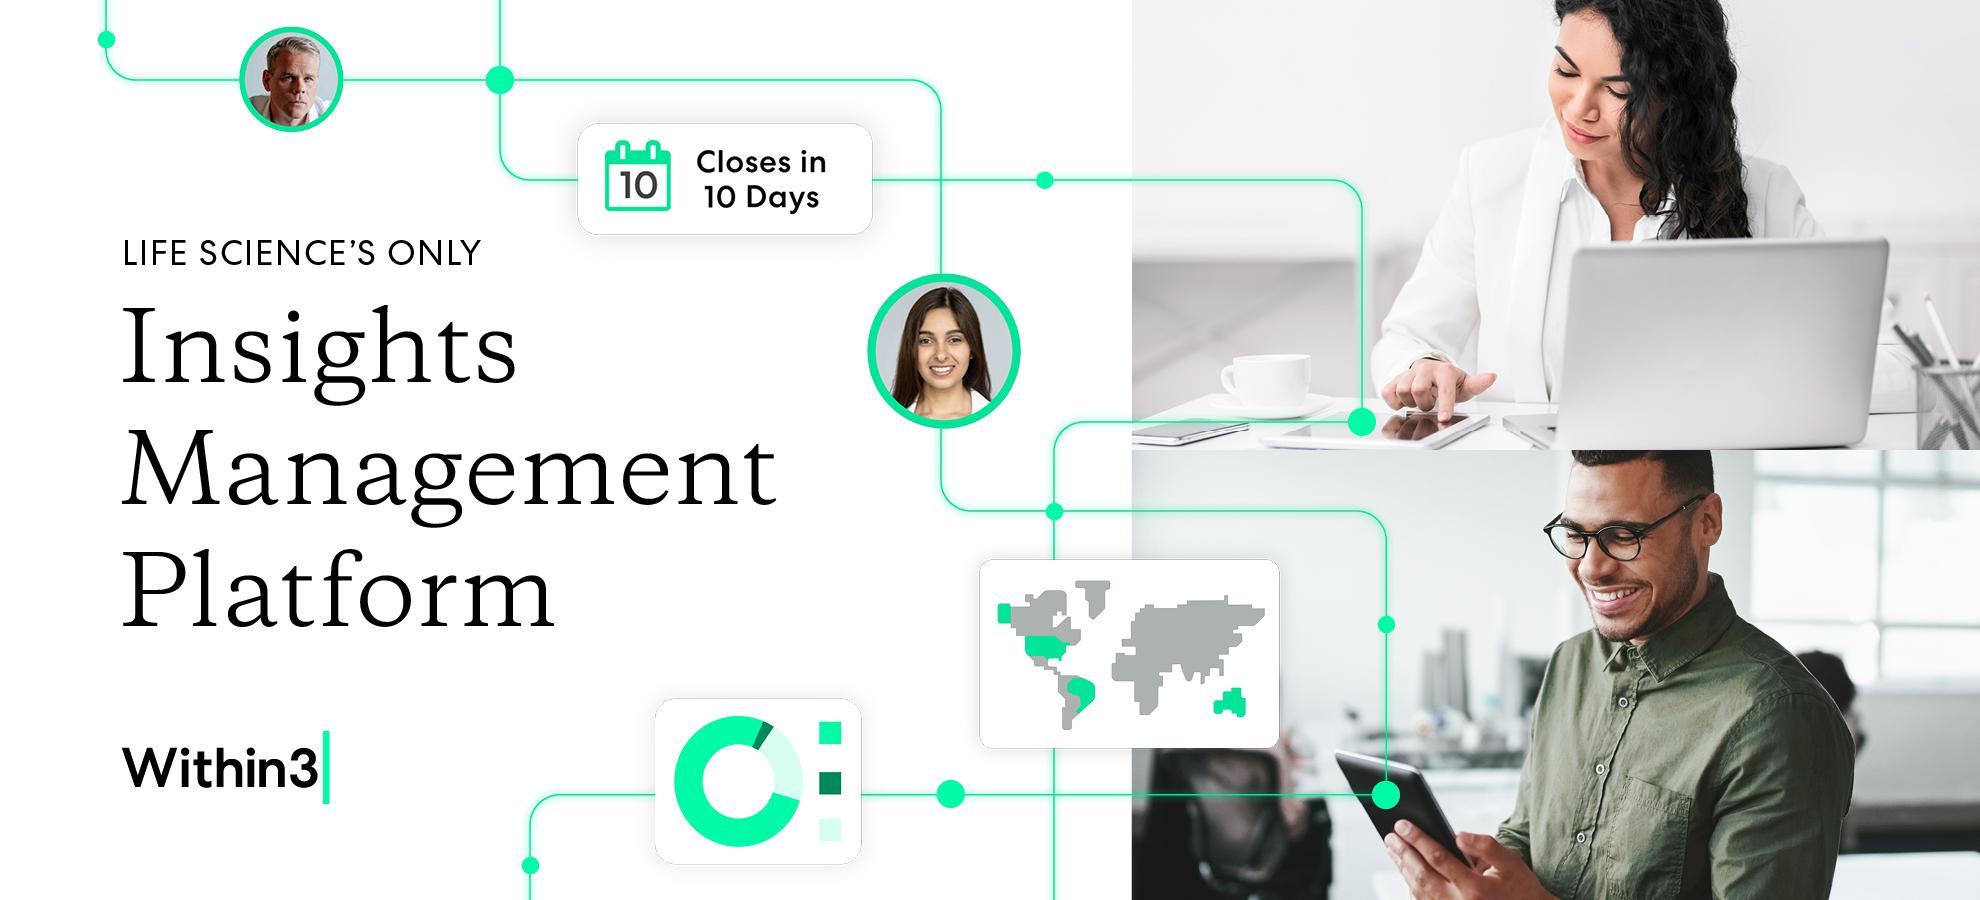 insights management platform enhancements